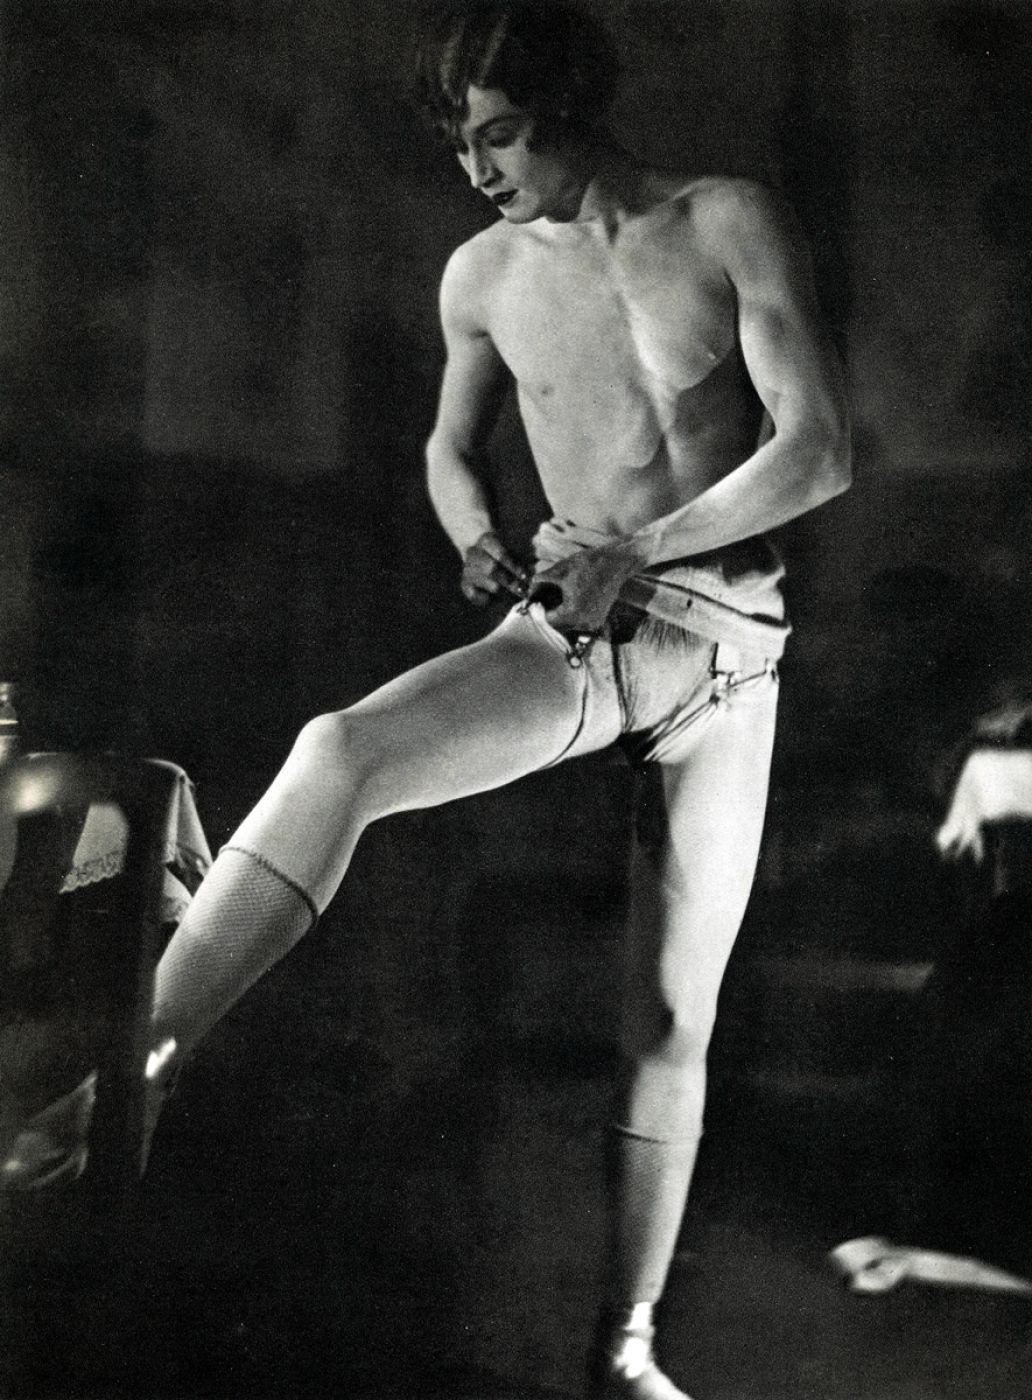 Man Ray, “Untitled”, 1926